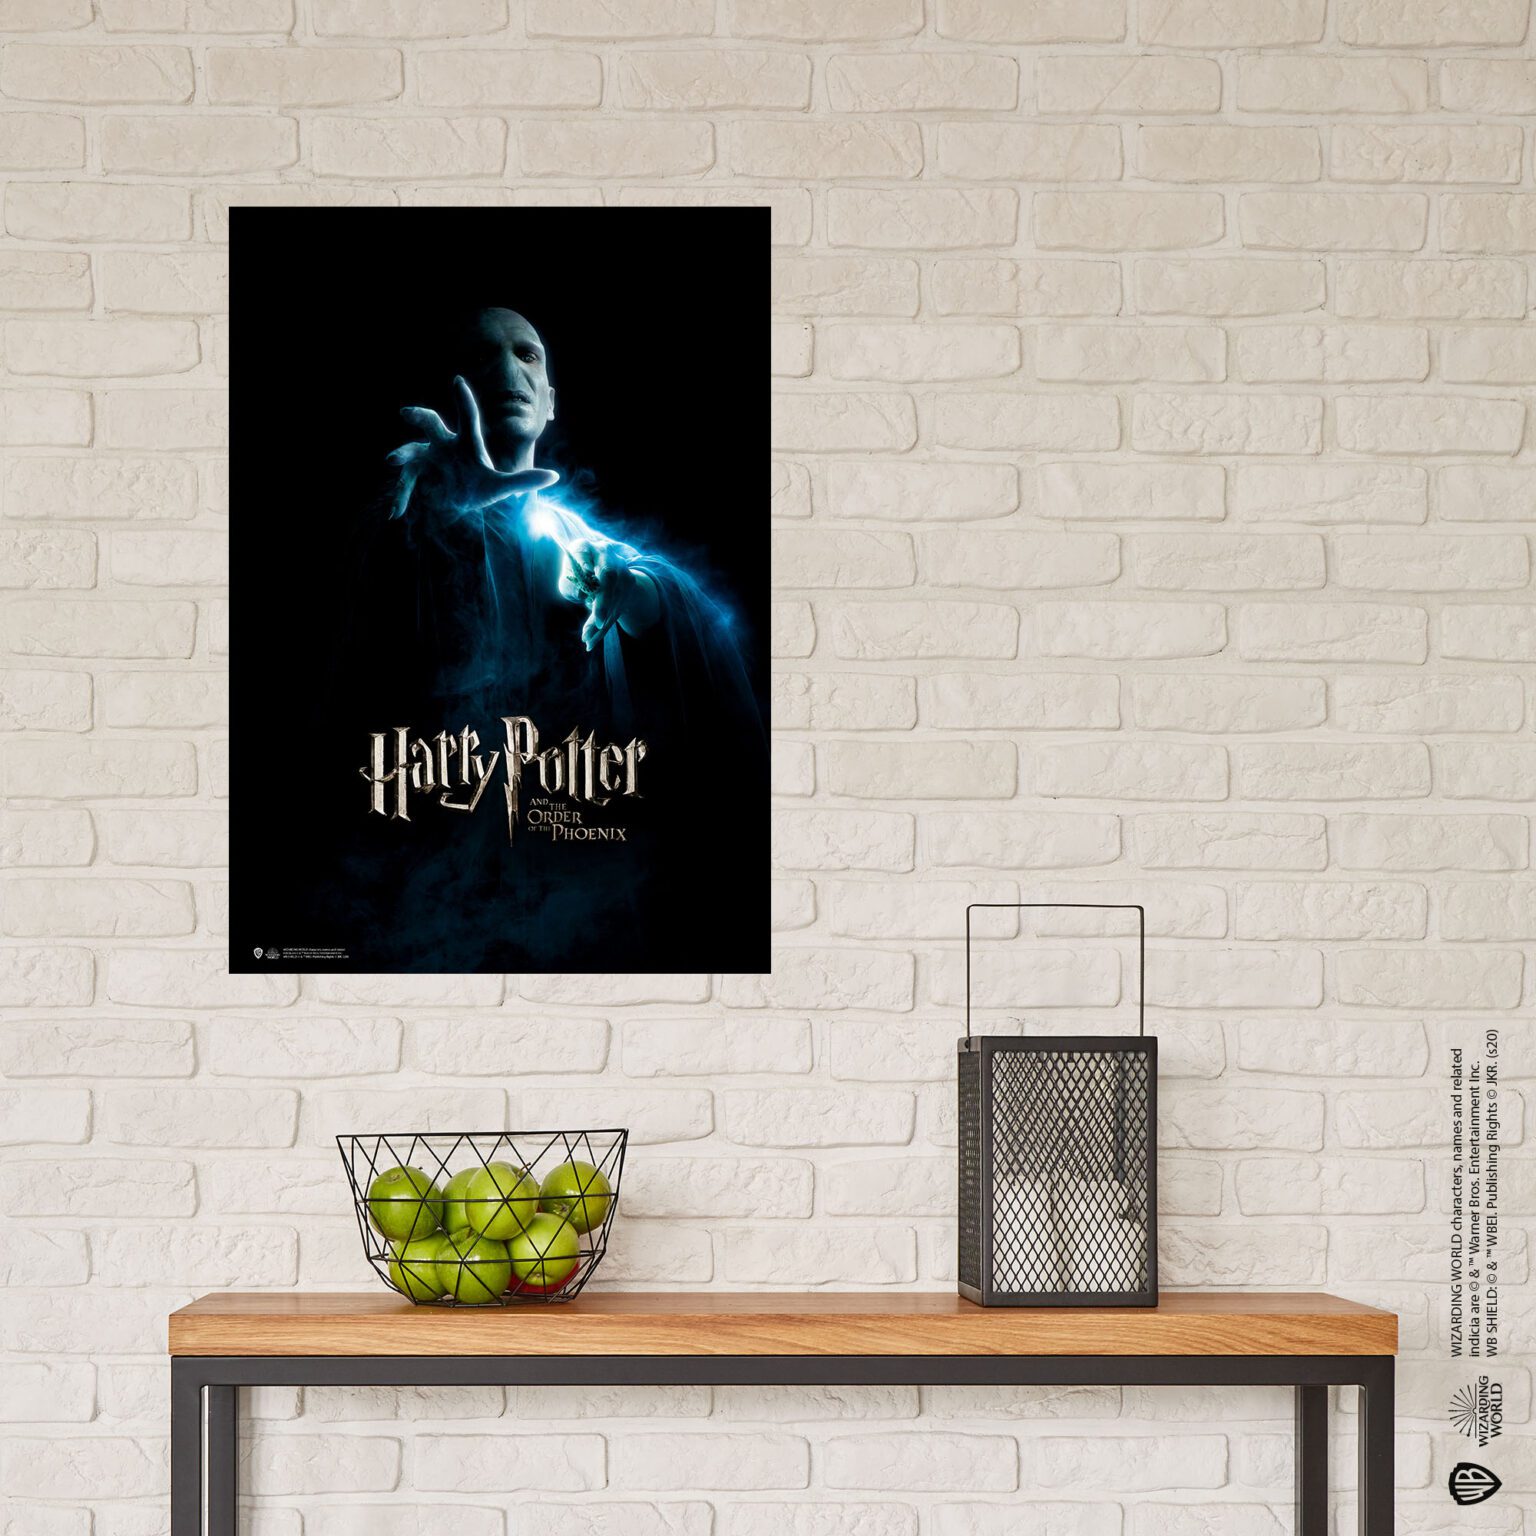 Harry Potter Voldemort poster afiş ve poster özel tasarım poster harry potter diyarında lisanslı